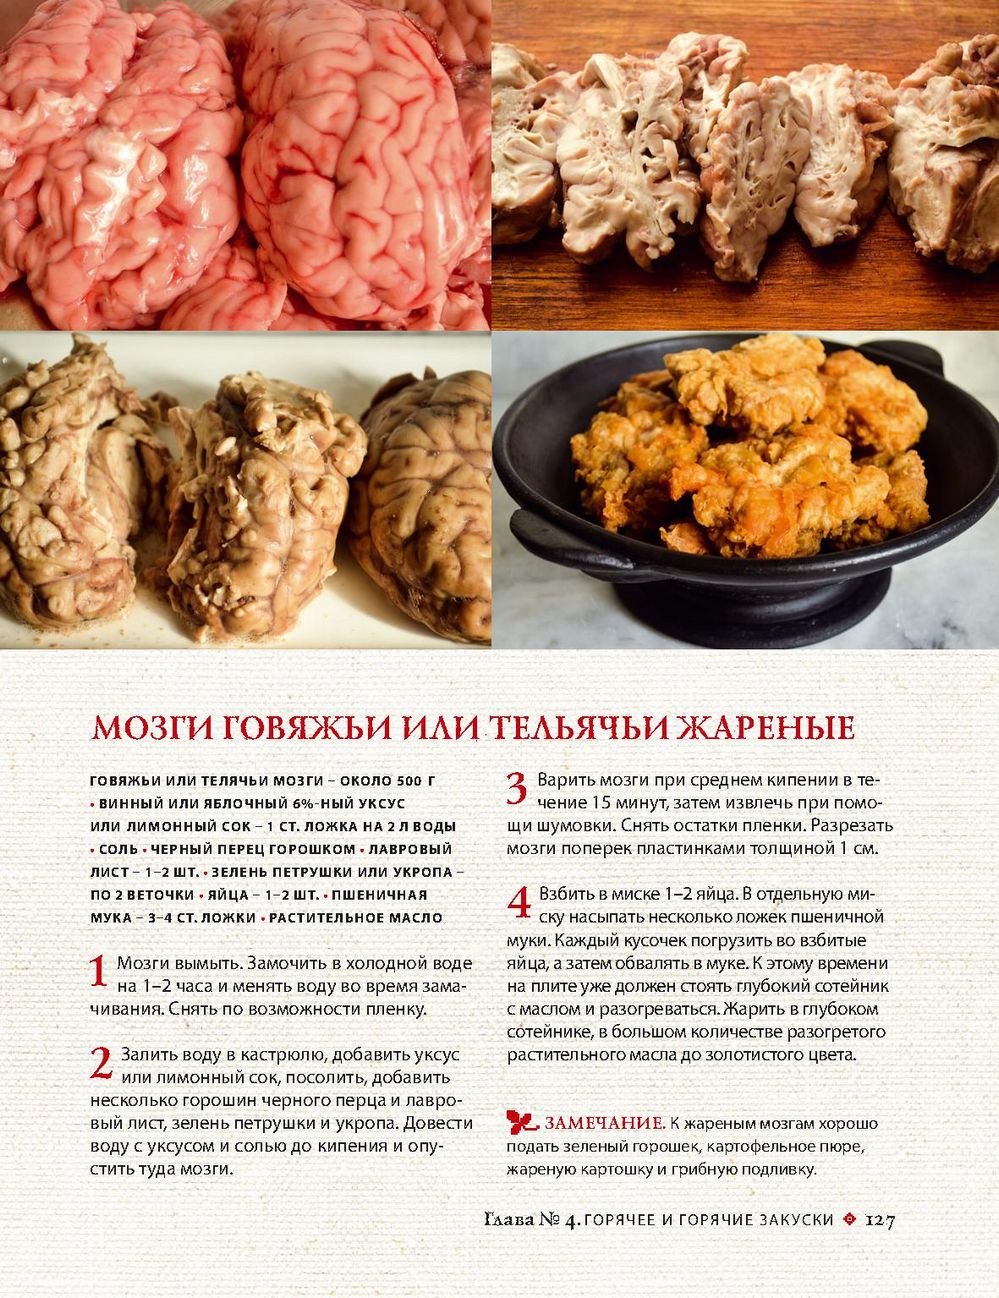 Мозги говяжьи - рецепты